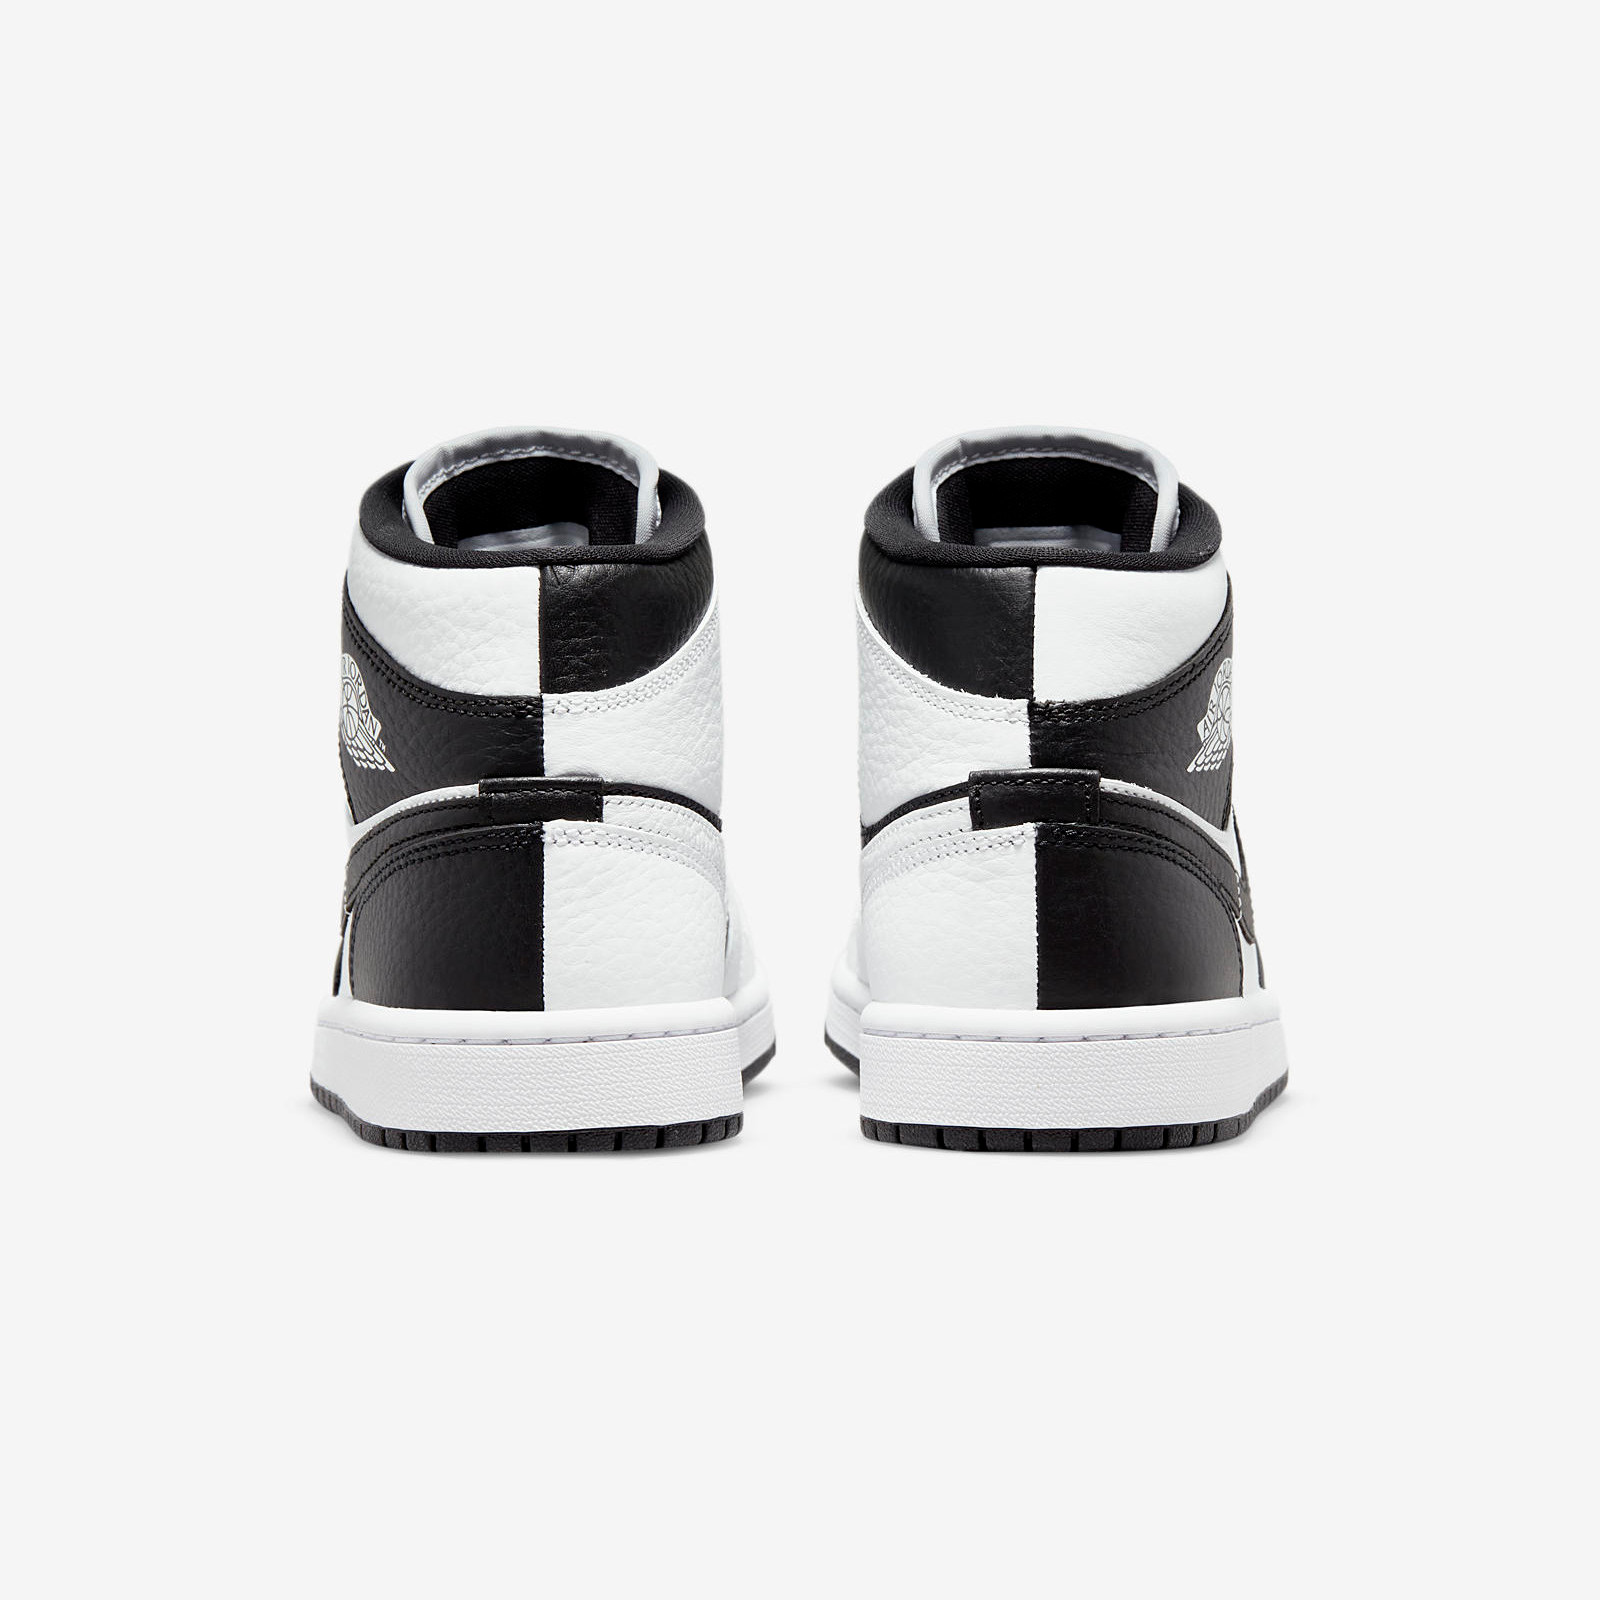 Air Jordan 1 Mid
Black / White